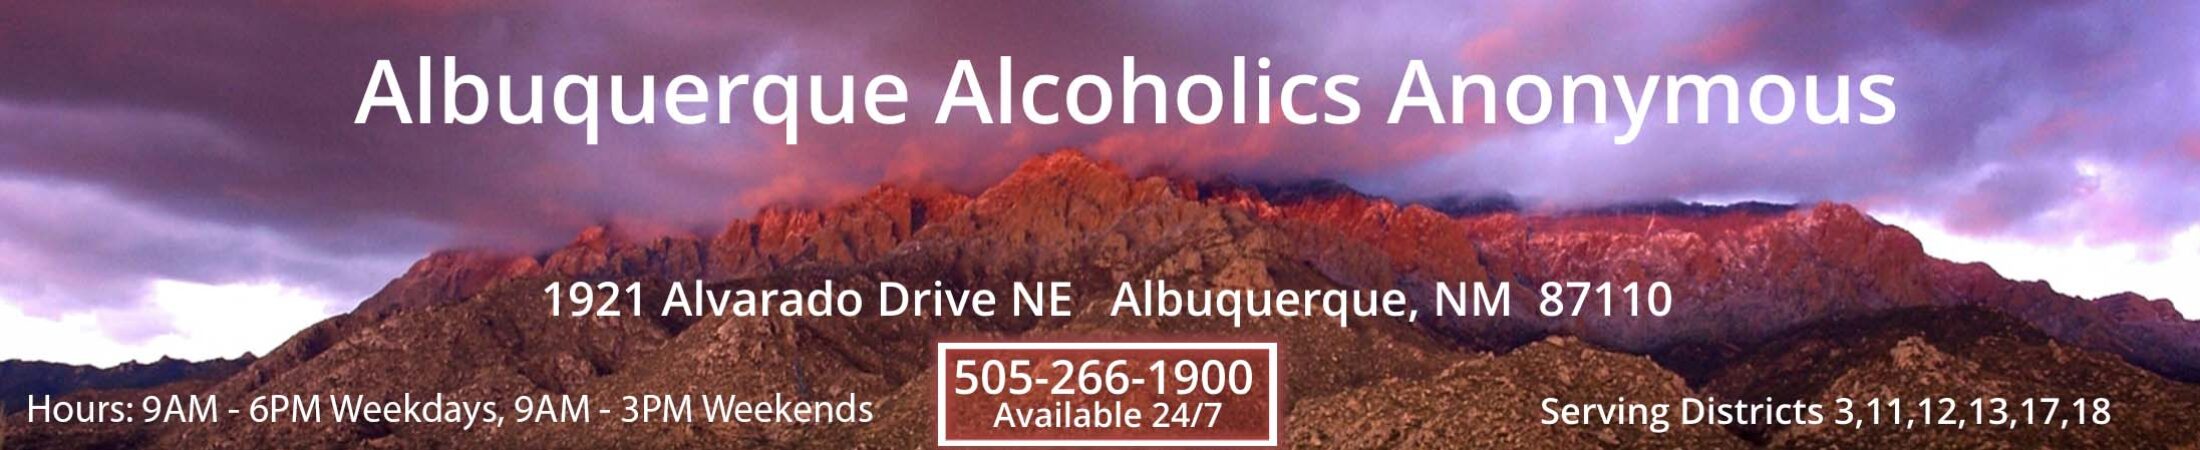 Albuquerque Alcoholics Anonymous